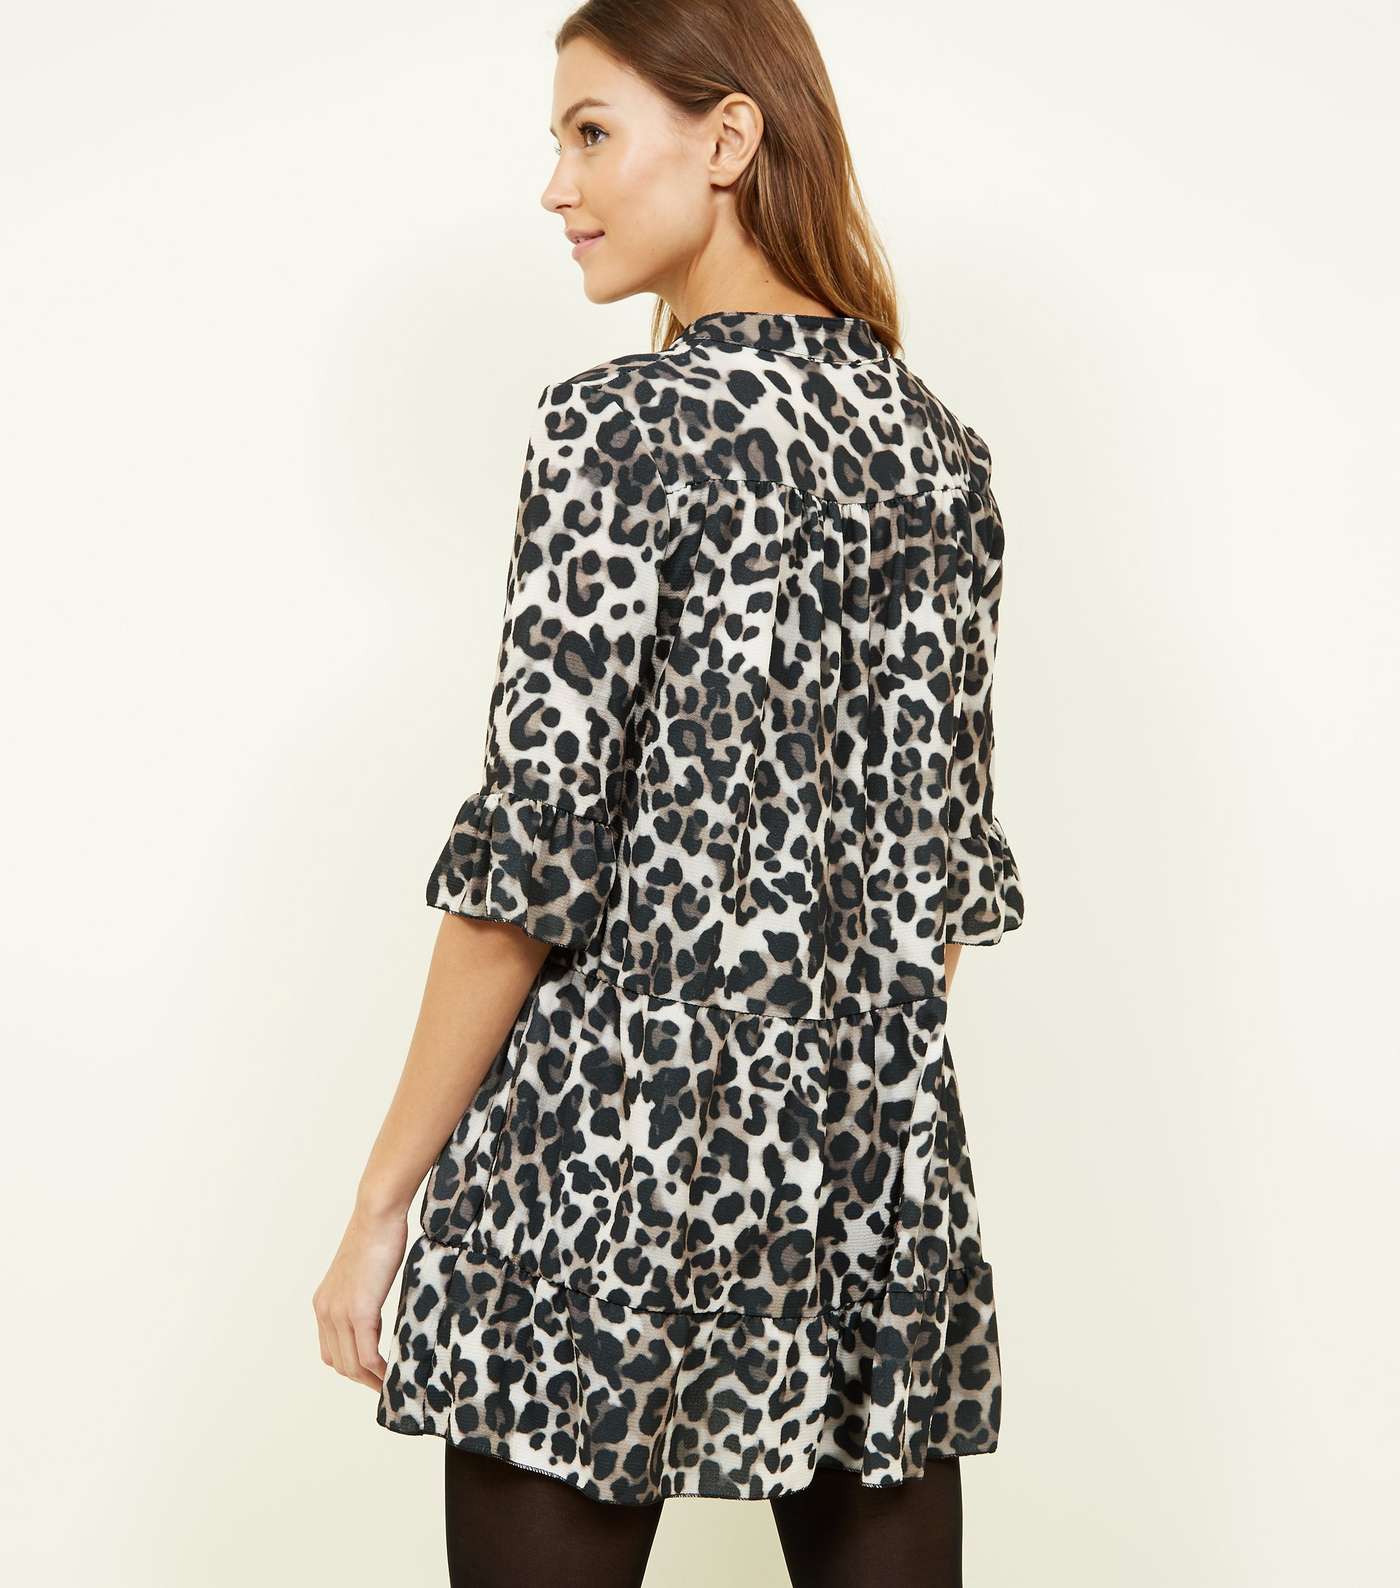 Cameo Rose Crepe Leopard Print Smock Dress Image 3